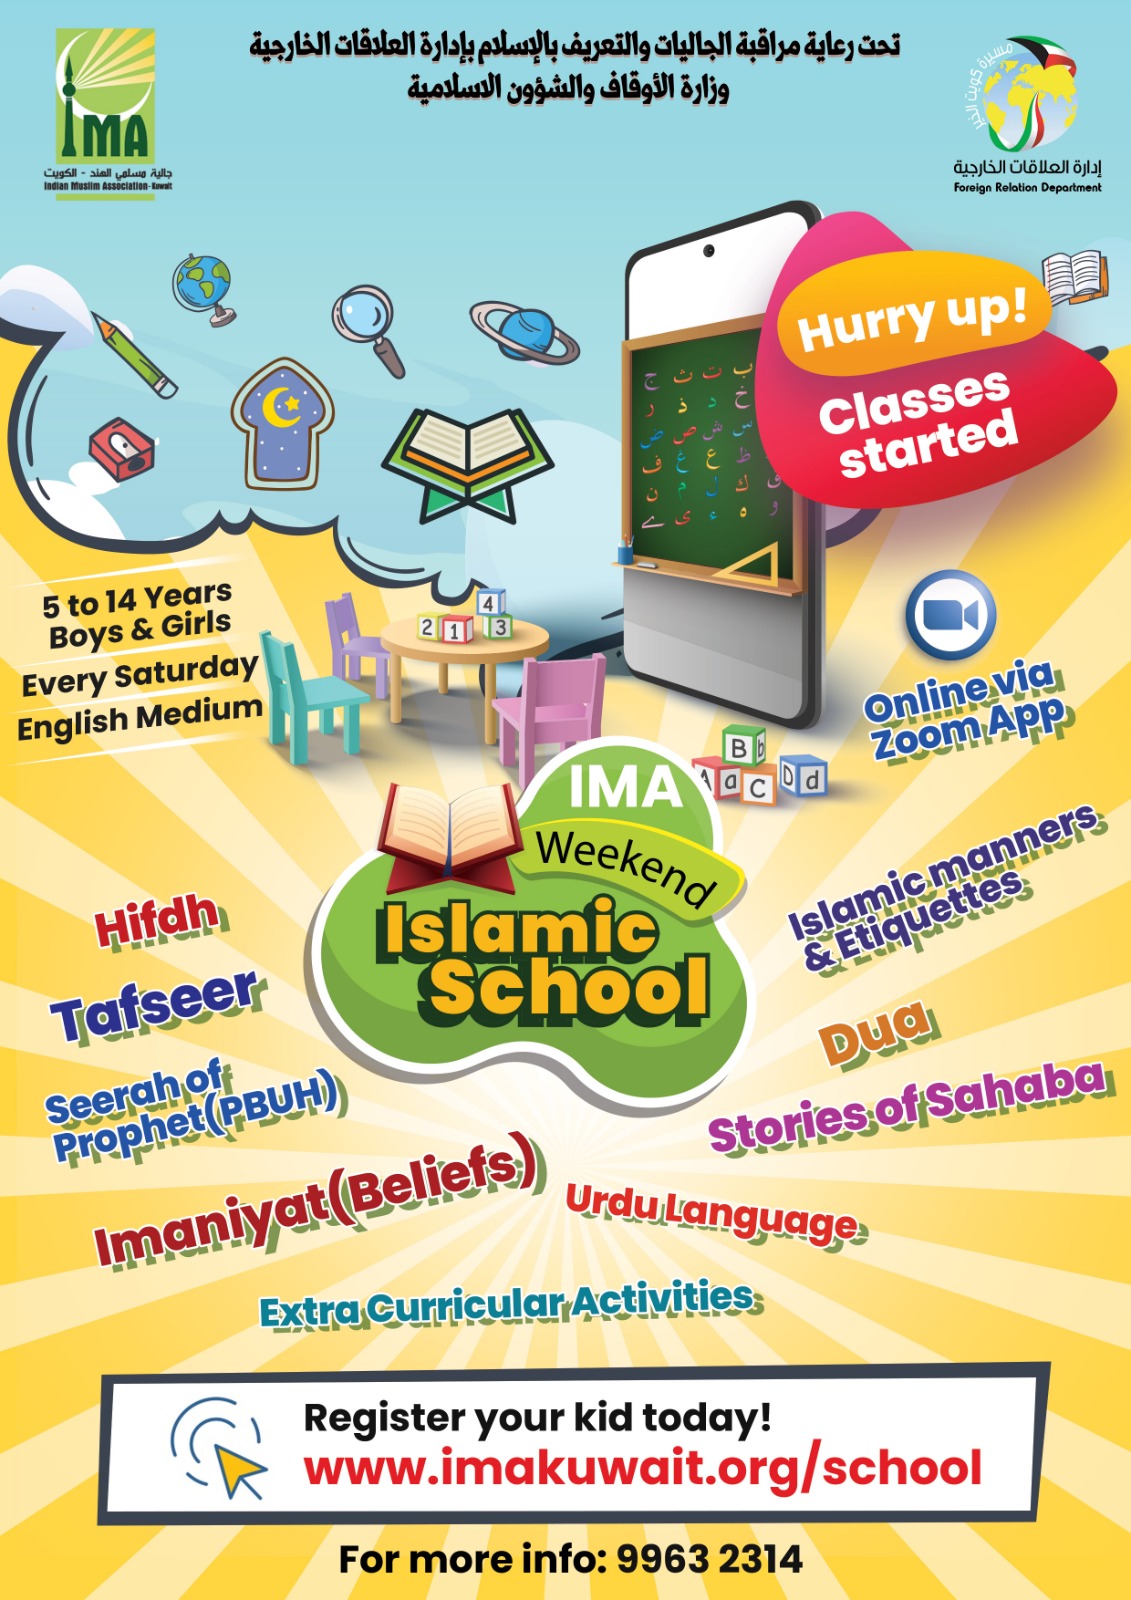 IMA Kuwait starts Weekend Islamic School